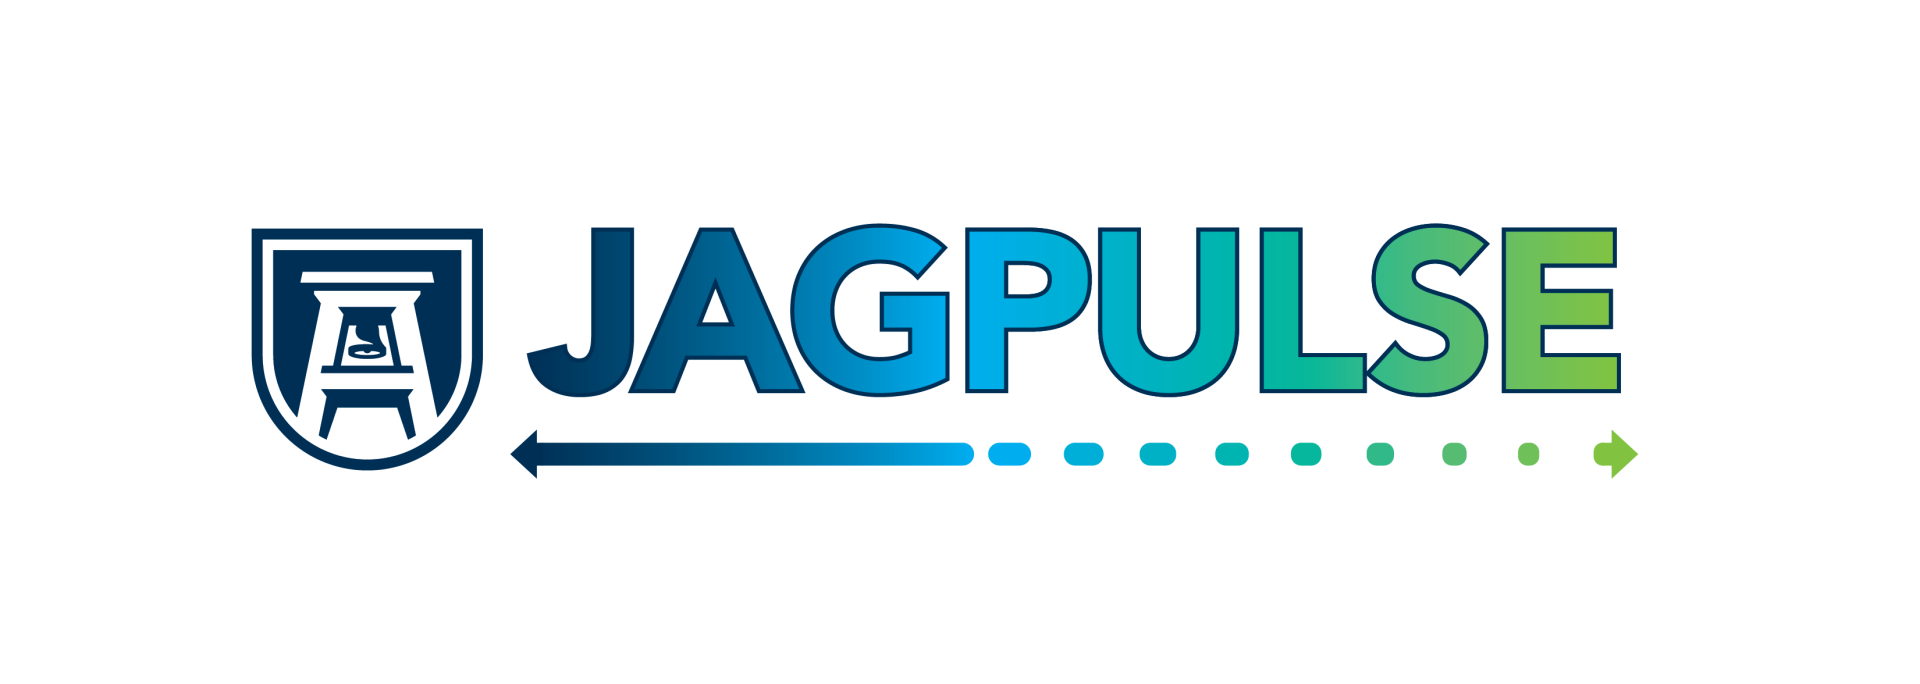 JagPulse logo